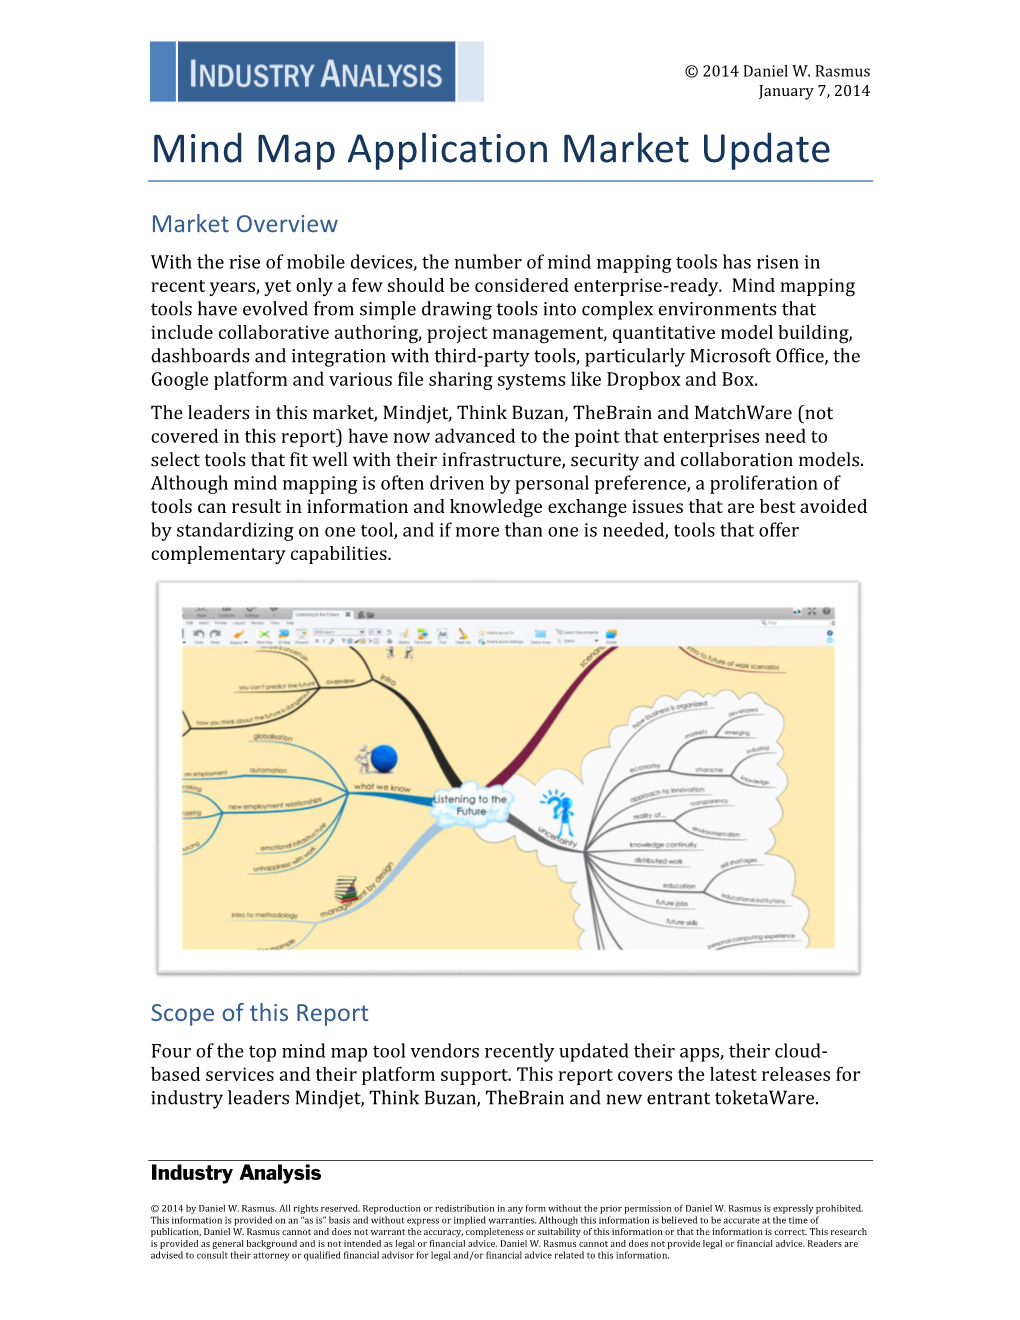 Mind Map Application Market Update